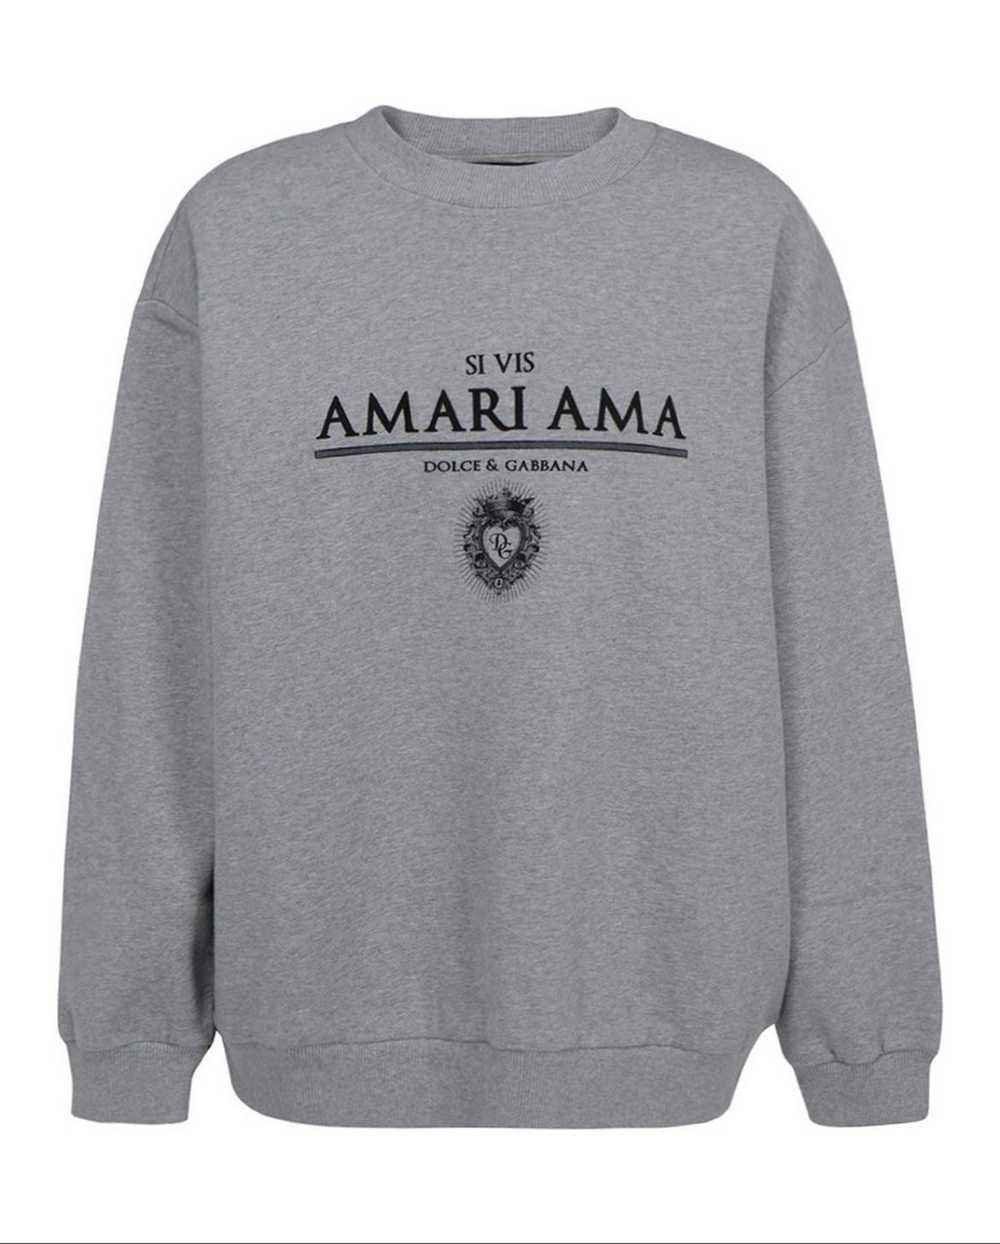 Dolce & Gabbana Amari Ama Cotton Jersey Sweatshirt - image 1